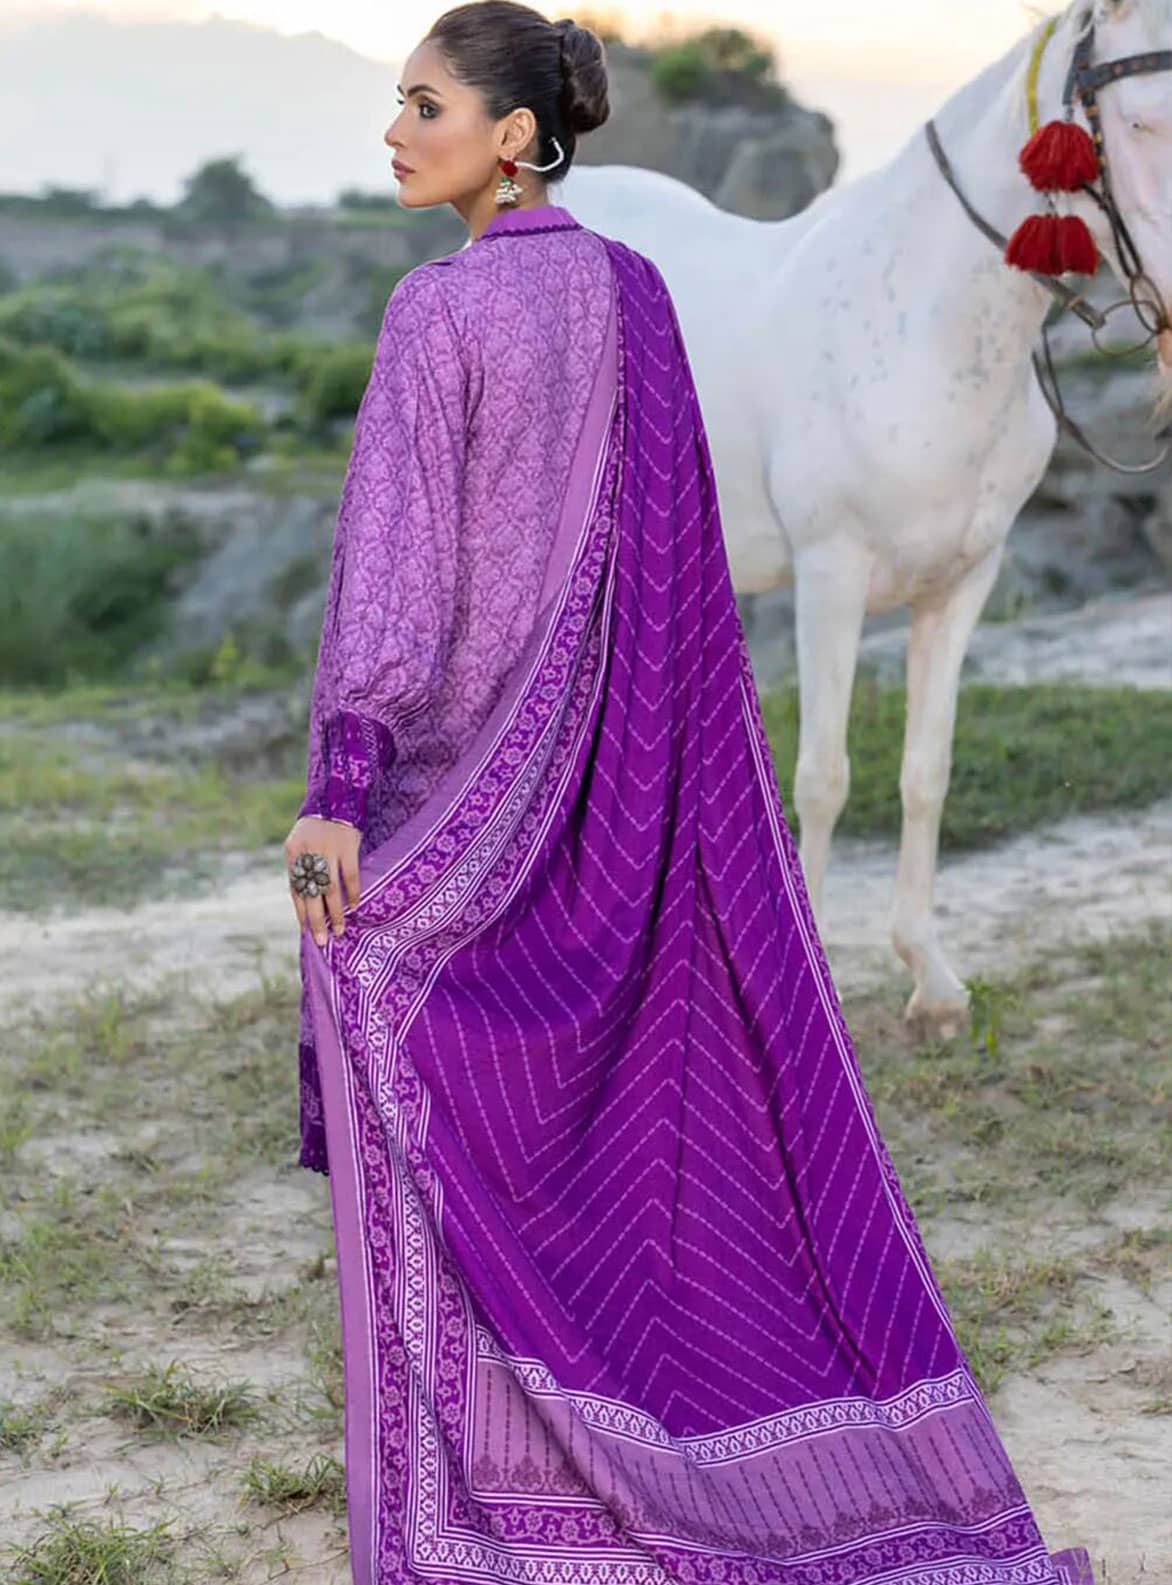 Gul Ahmed 3 Pc Unstiched Linen Dress (GR-11)